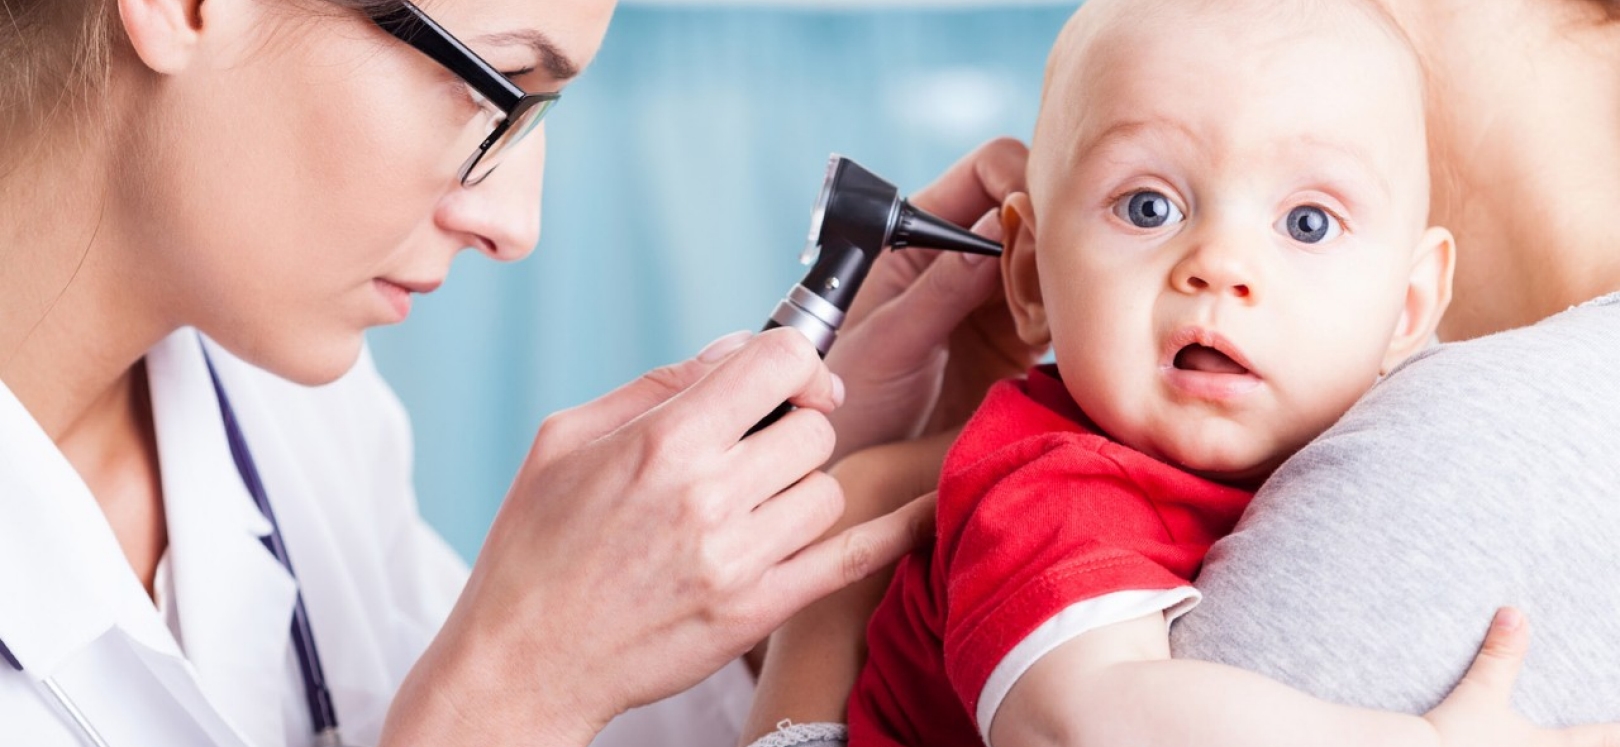 Doctor examining baby boy with otoscope